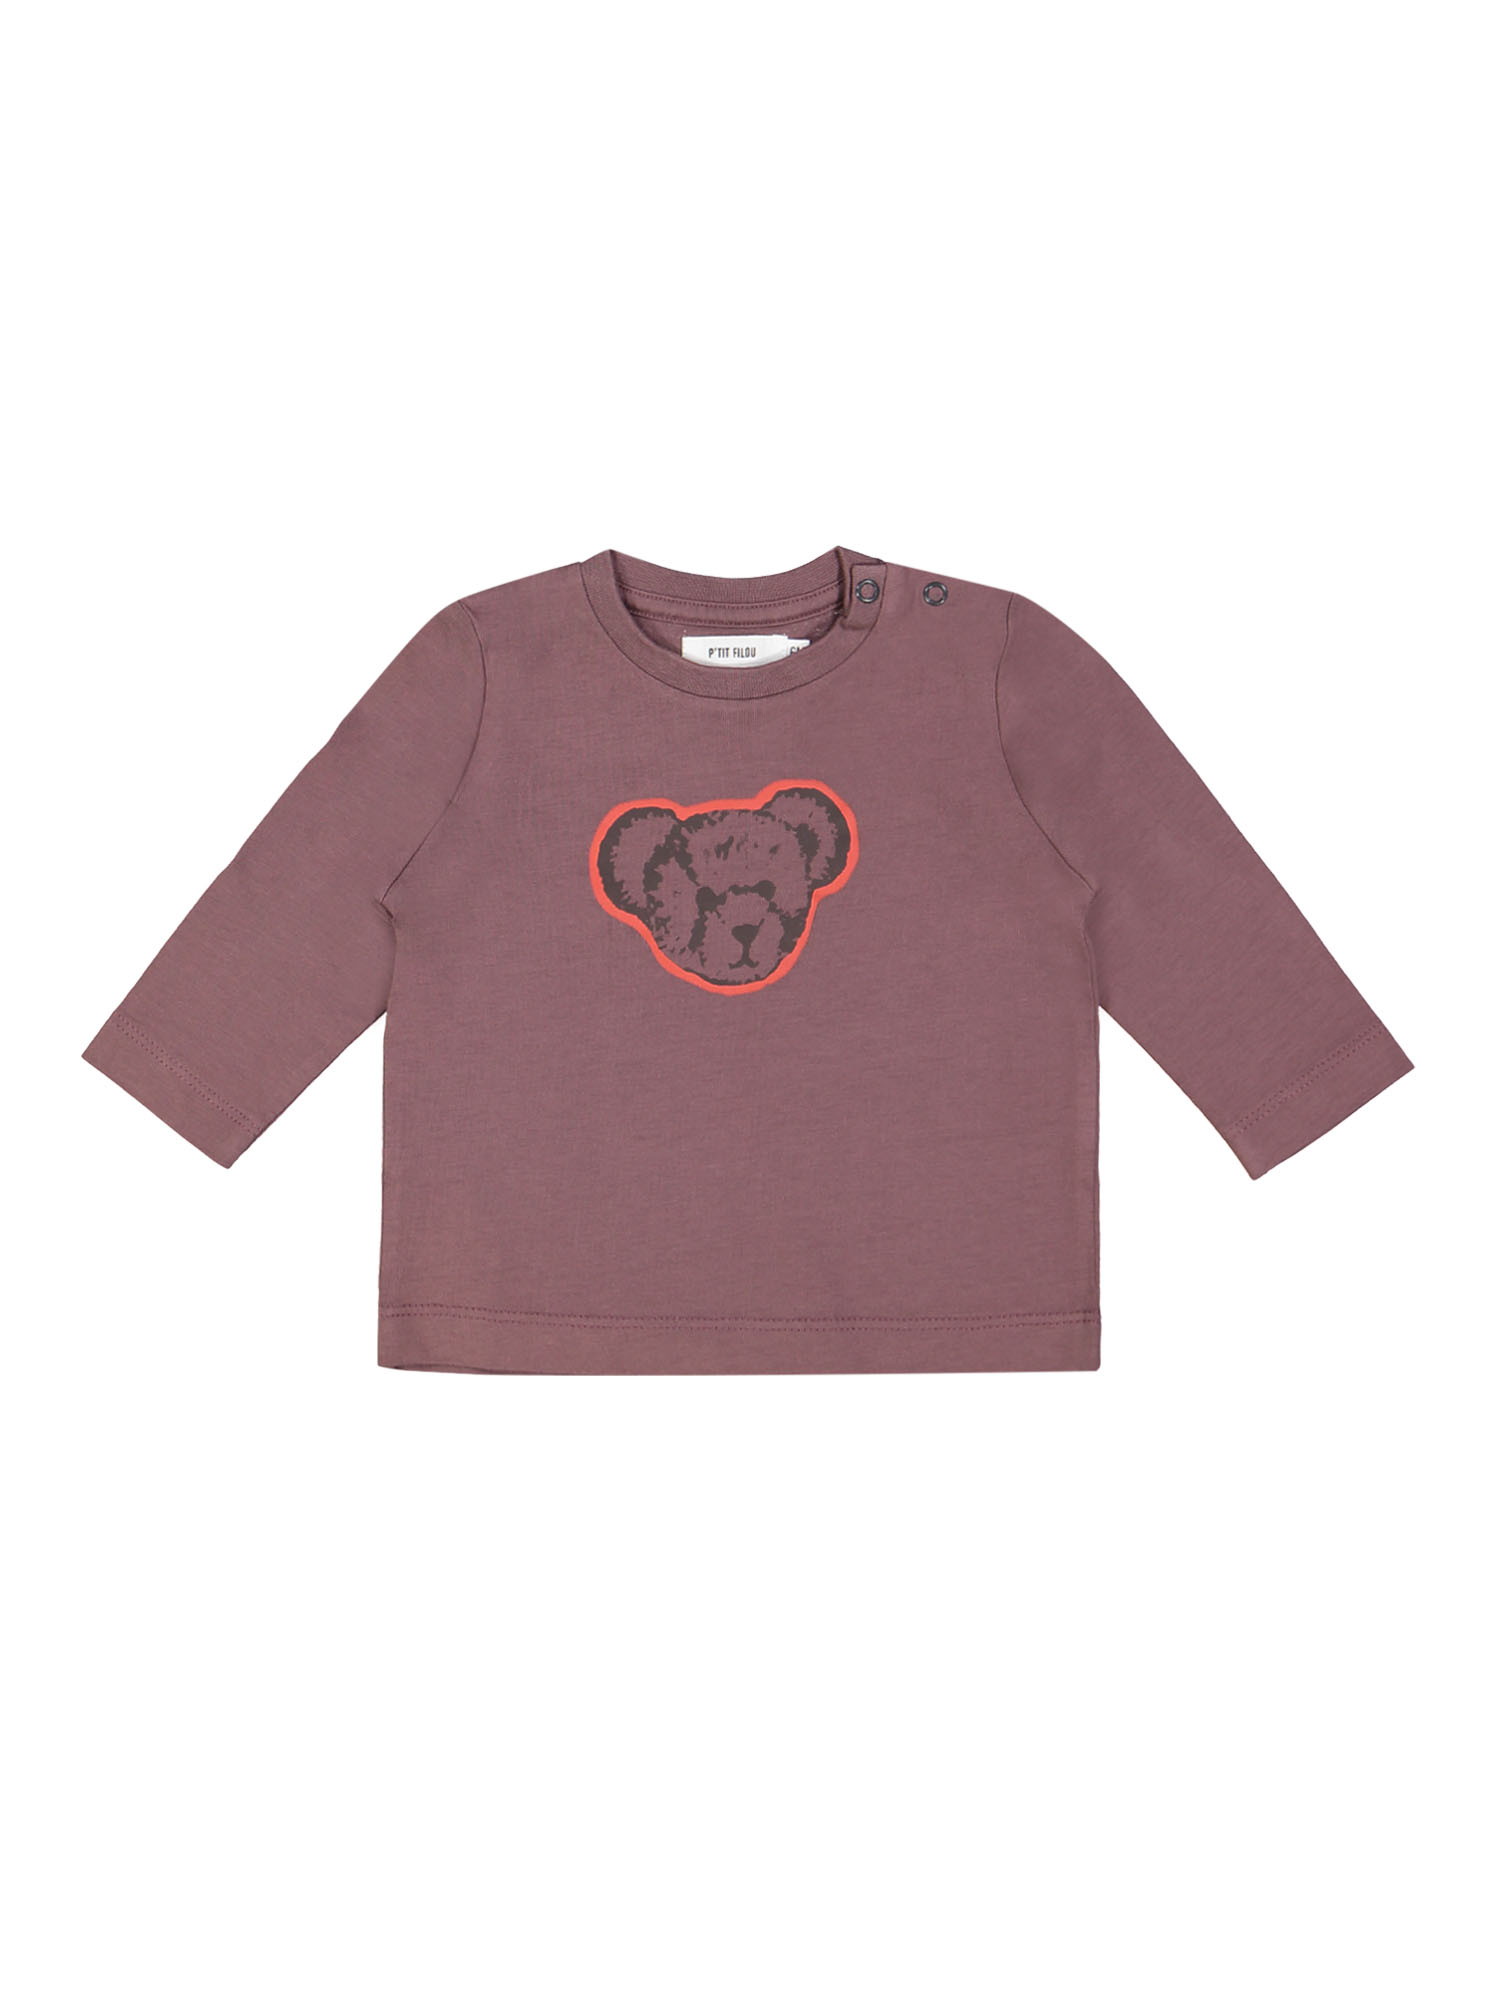 T-shirt teddy bear aubergine 06m